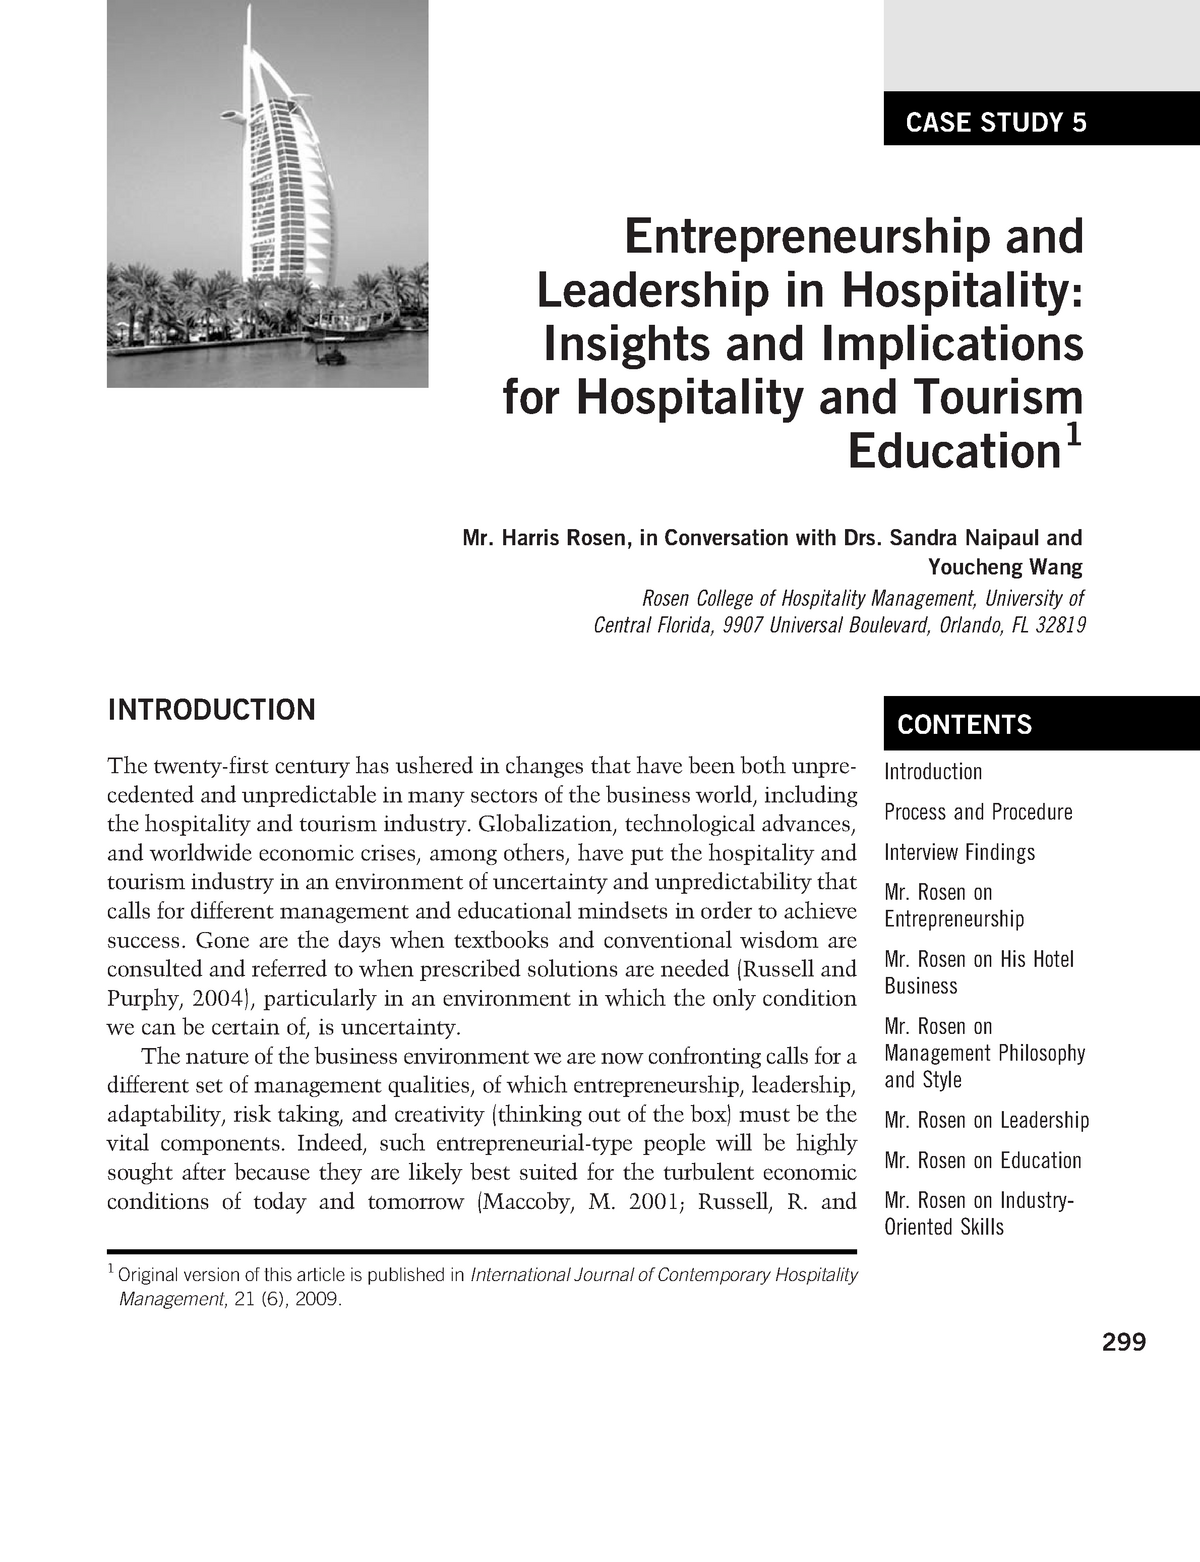 hospitality management case study assignment pdf